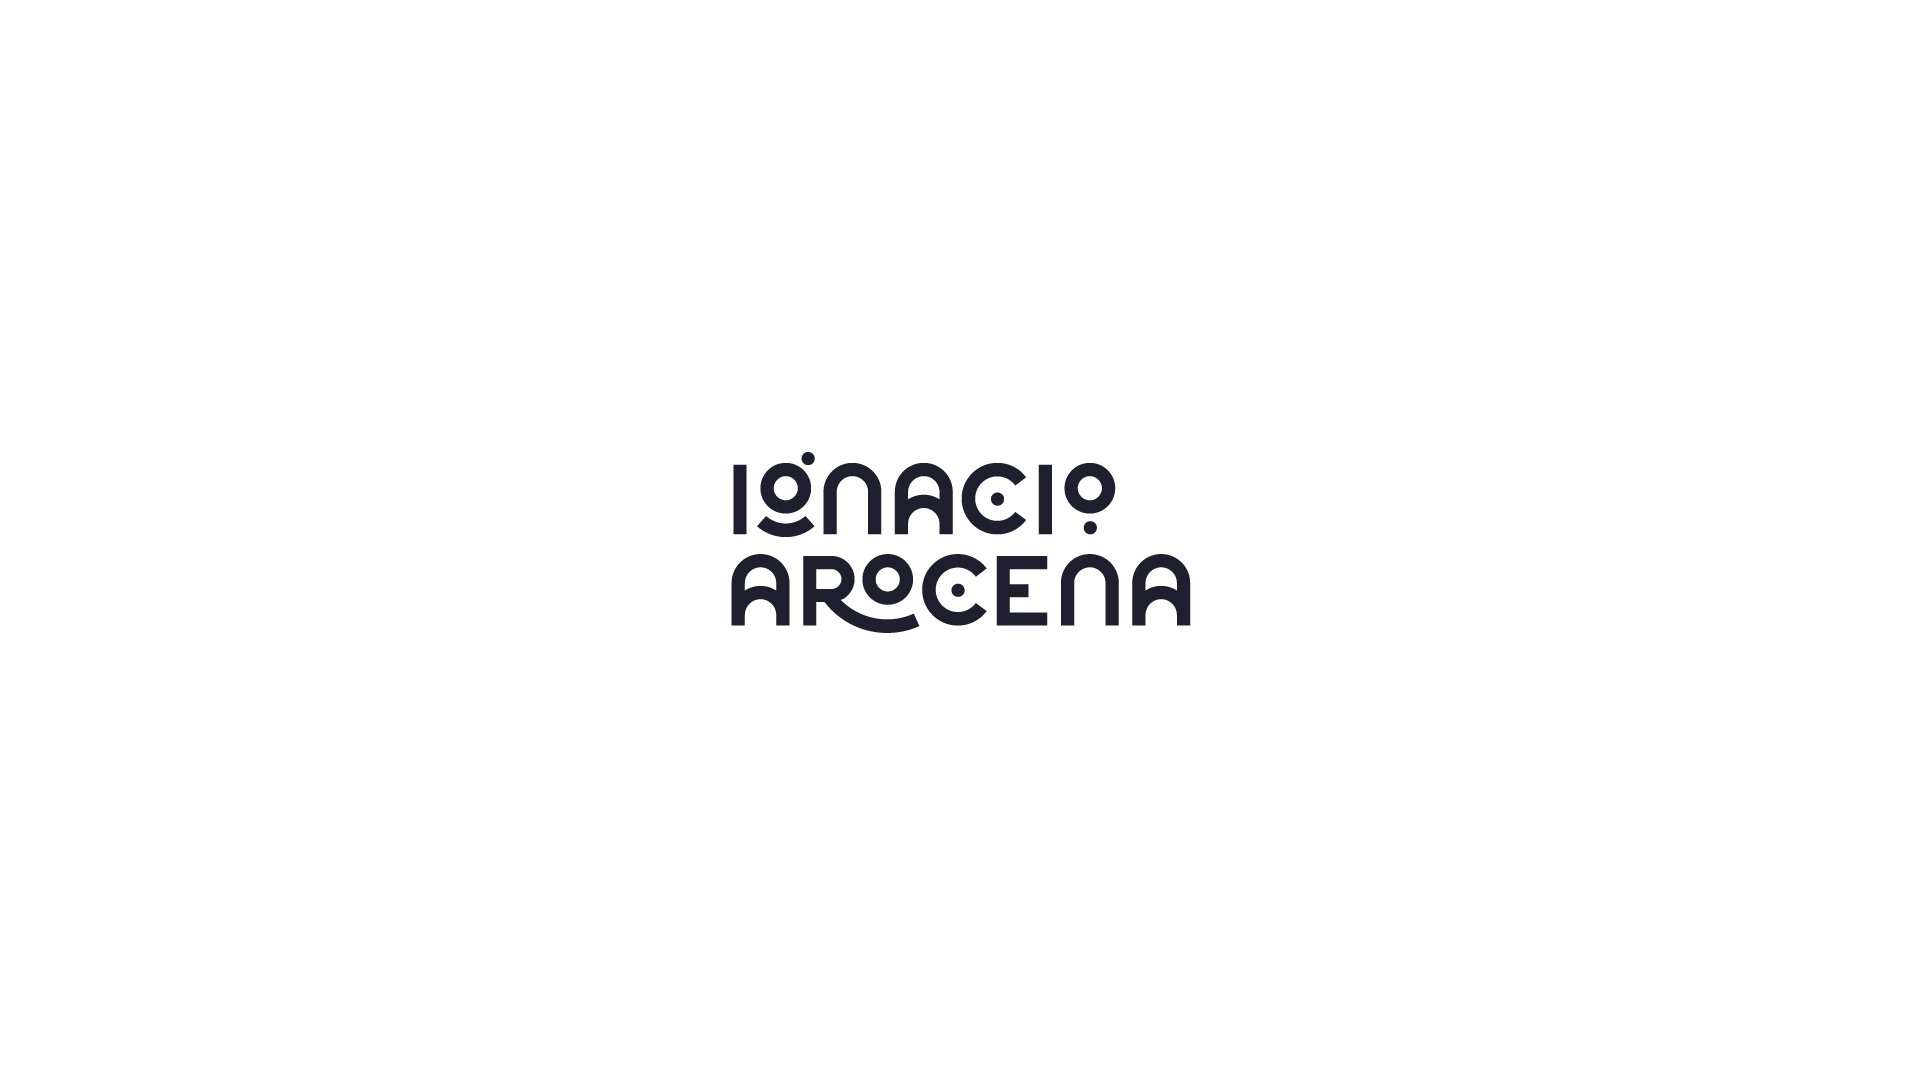 Ignacio-Arocena-logotipo-2